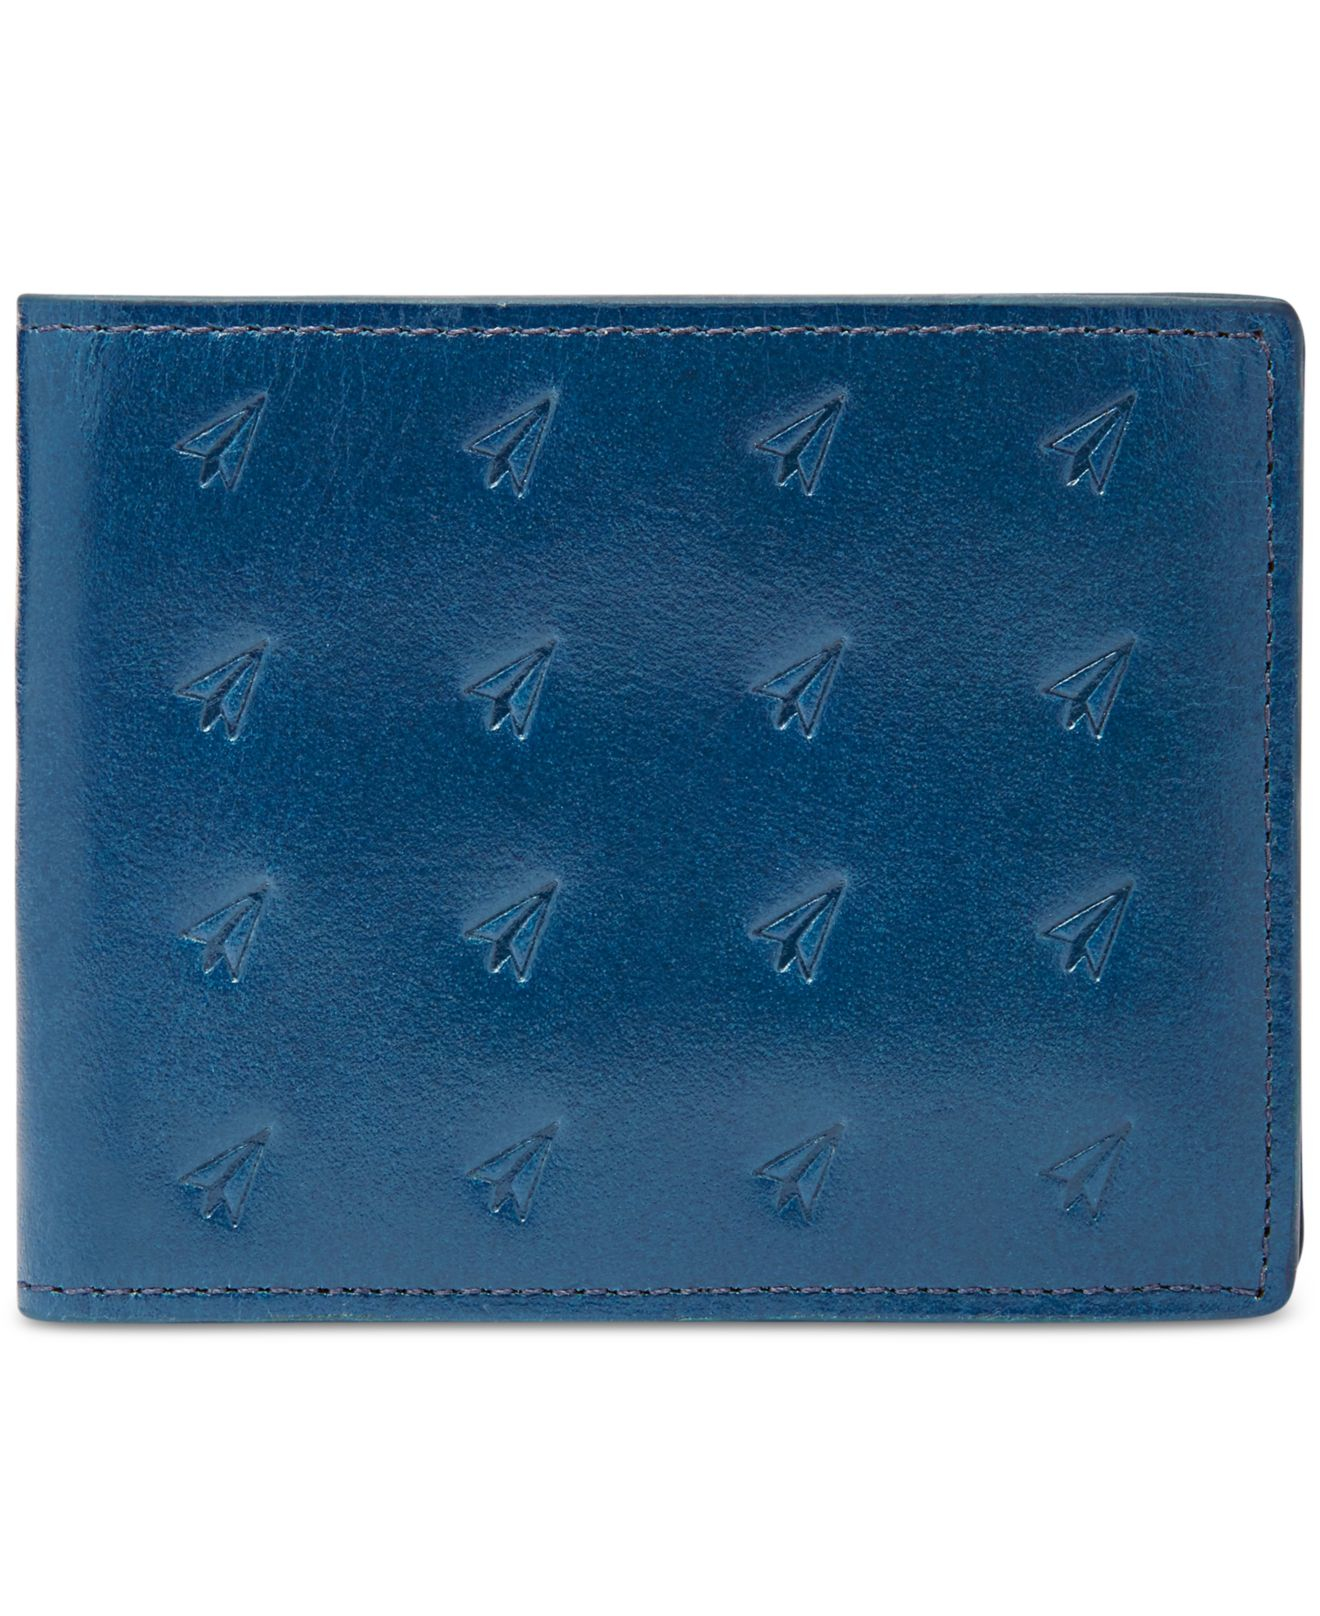 blue wallet mens